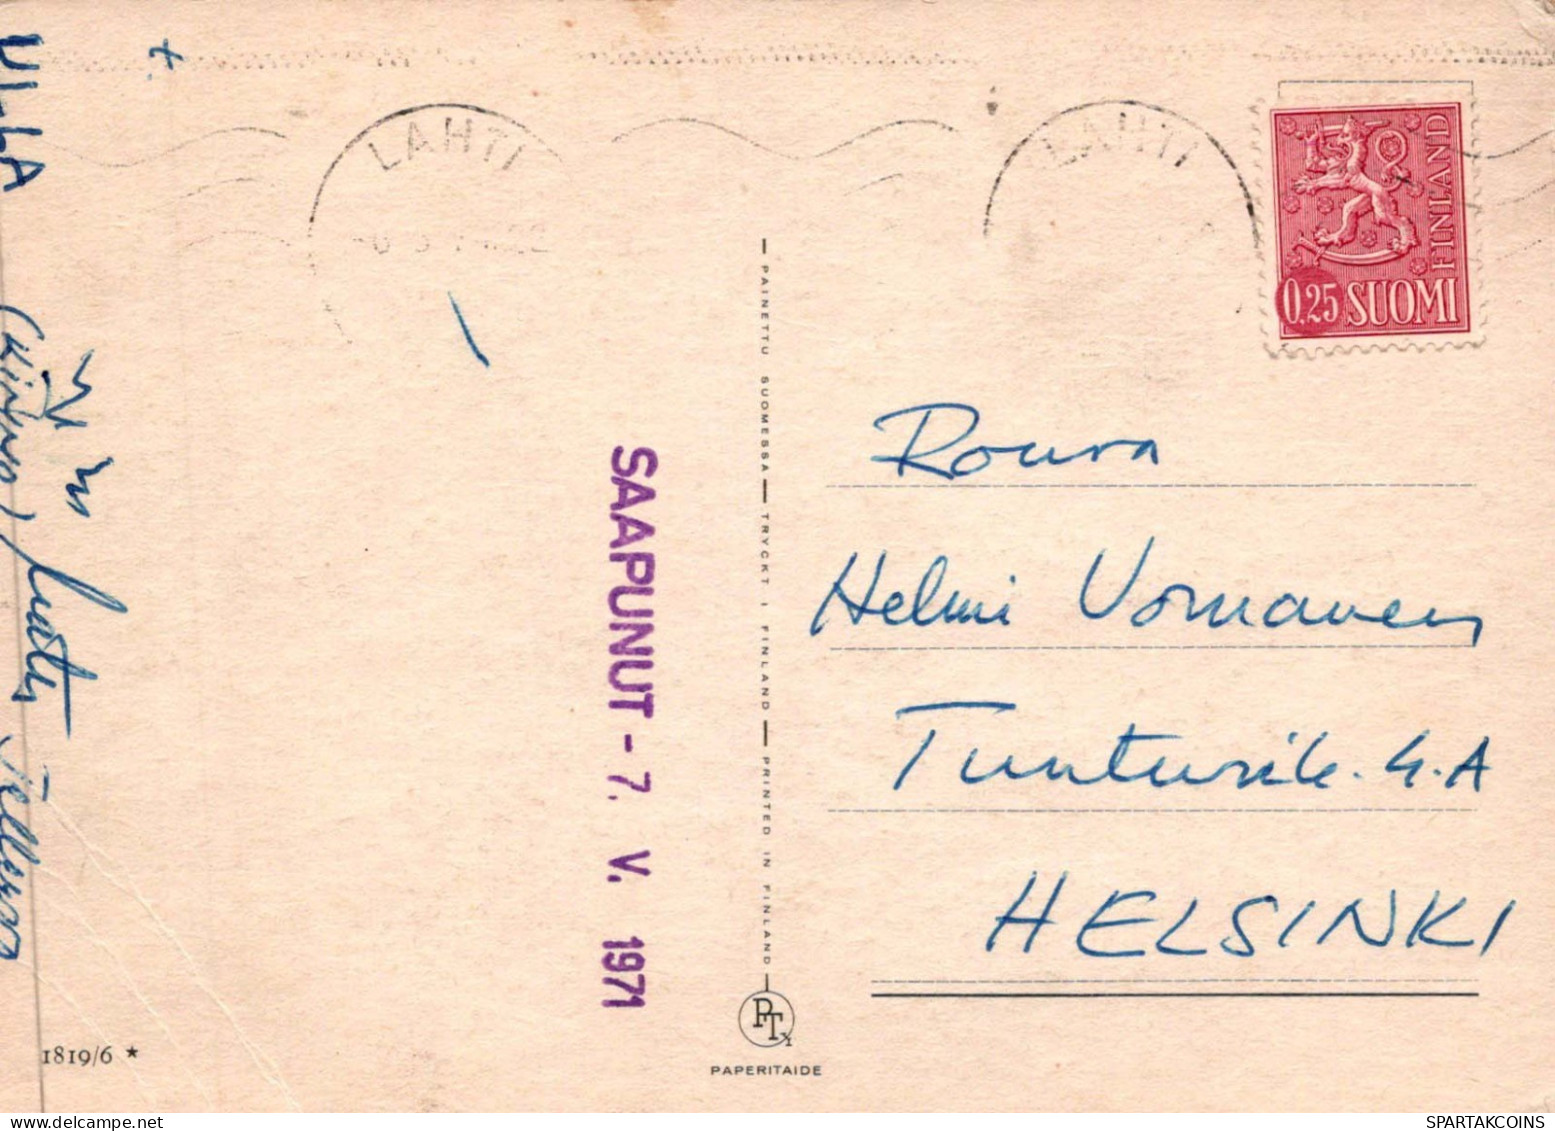 BAMBINO BAMBINO Scena S Paesaggios Vintage Postal CPSM #PBT522.IT - Scene & Paesaggi